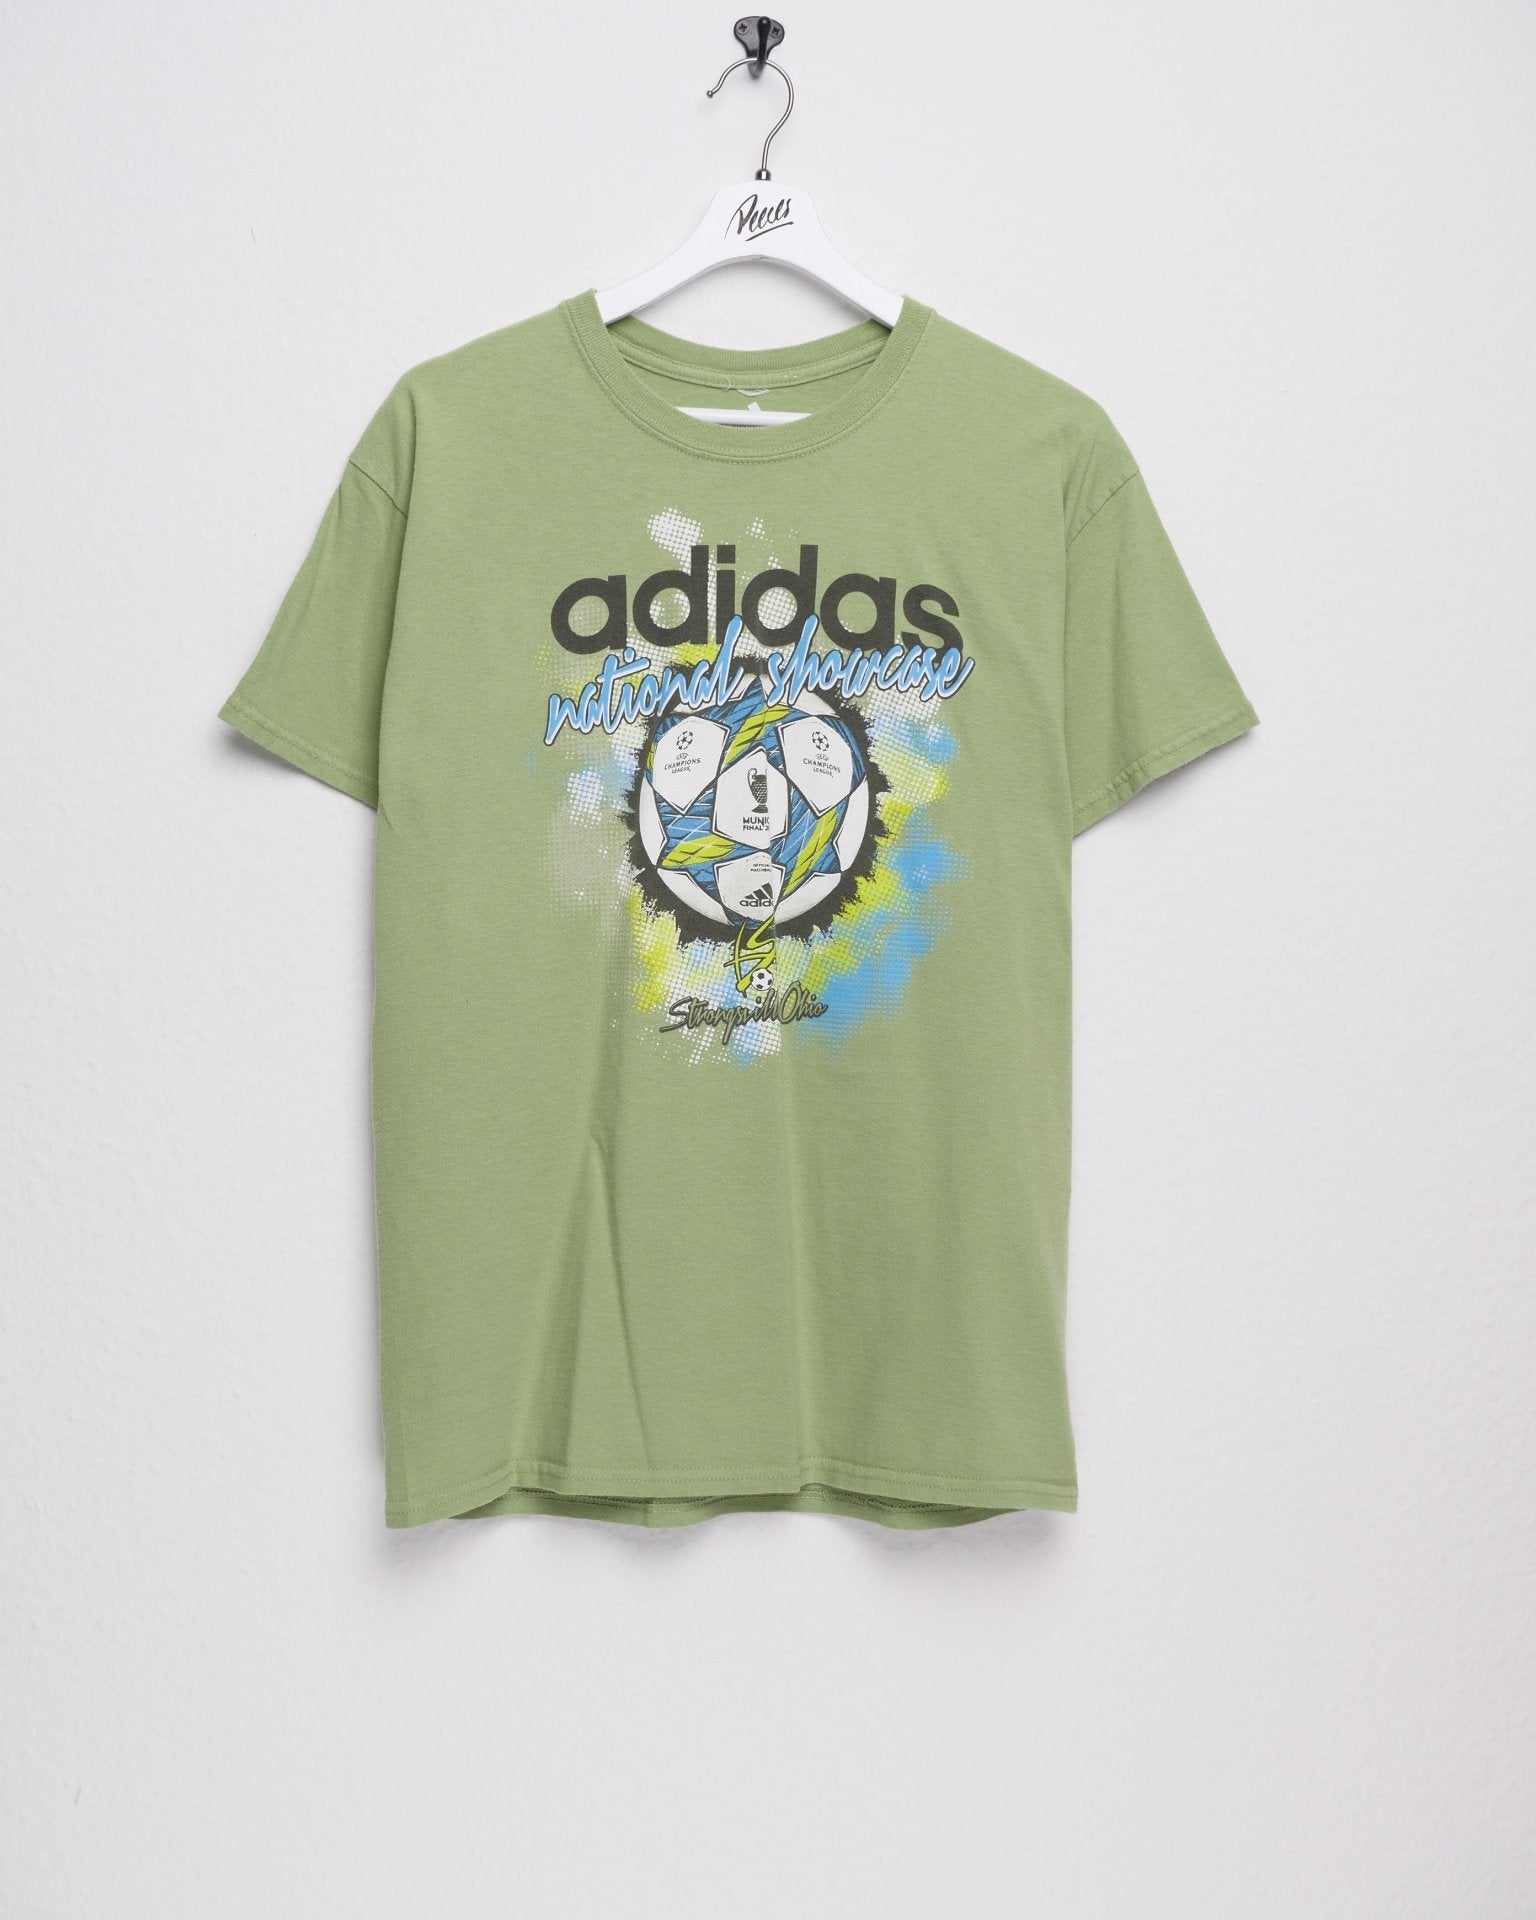 adidas printed Logo green Shirt - Peeces